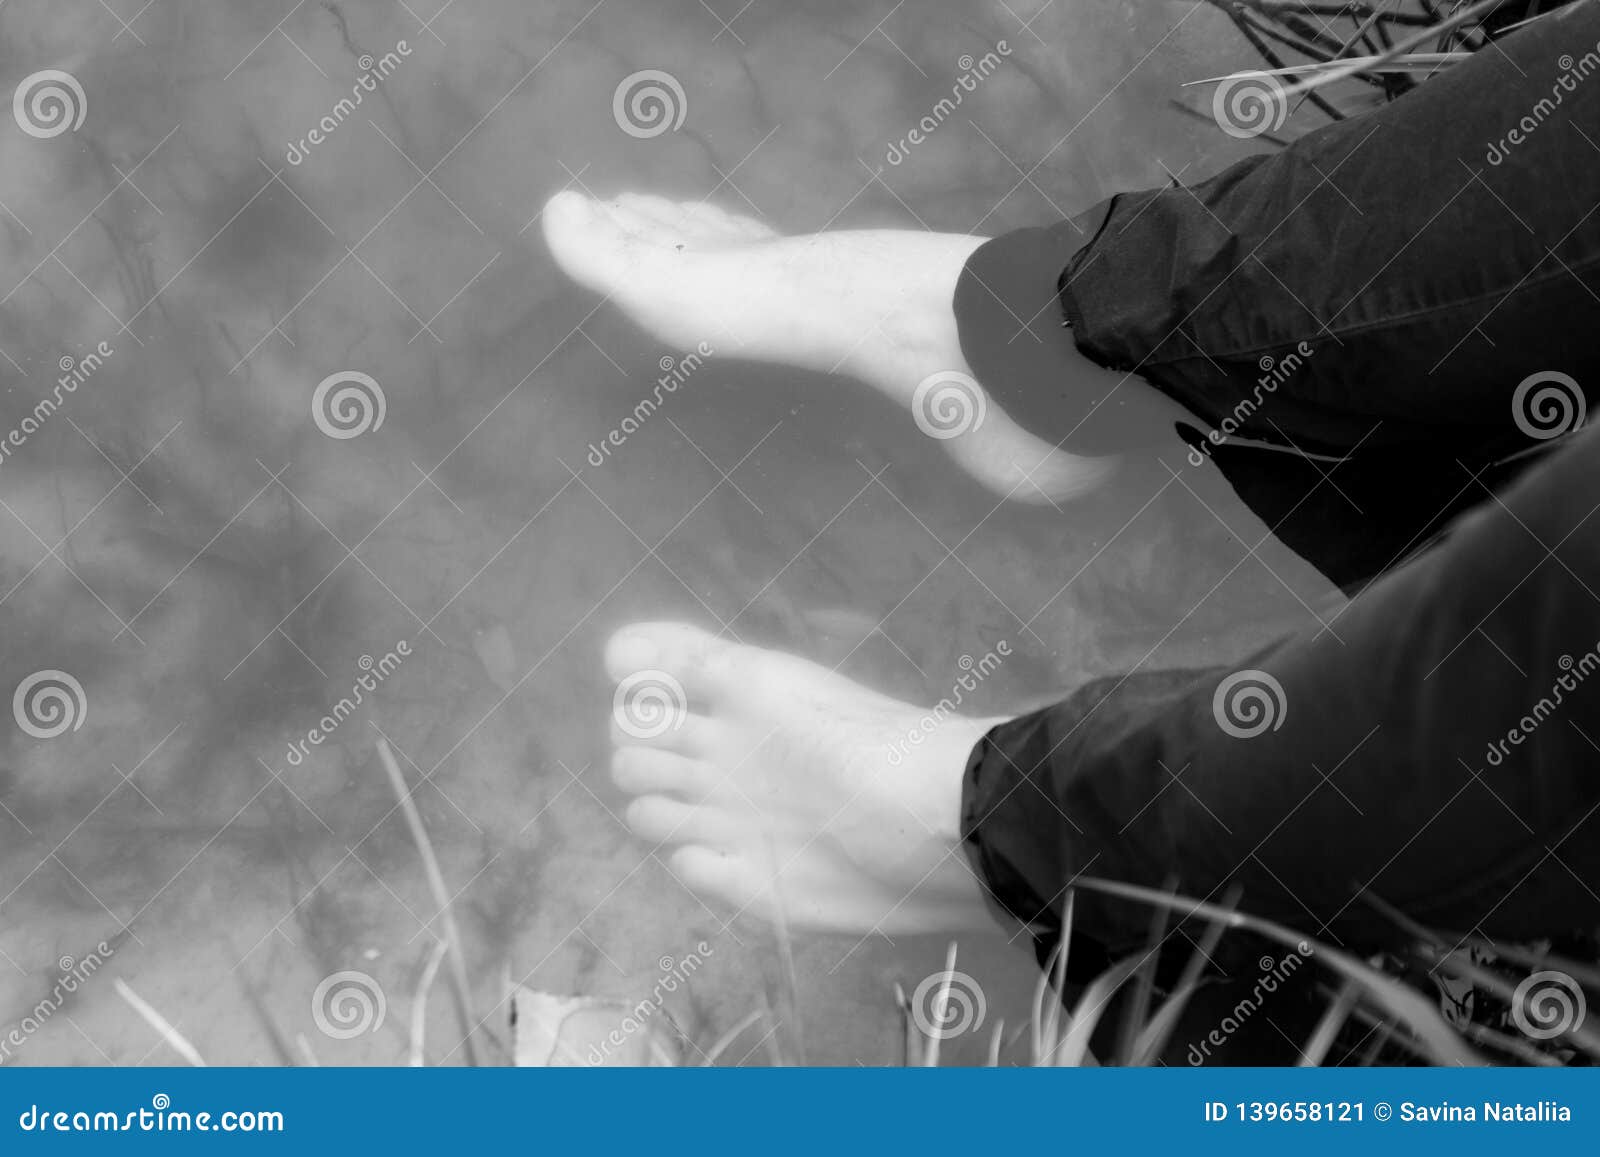 Feet River Travel Water Legs Man Meditation Sadness Splash Stream  Refreshing Barefoot Stock Image - Image of people, lifestyle: 139658121